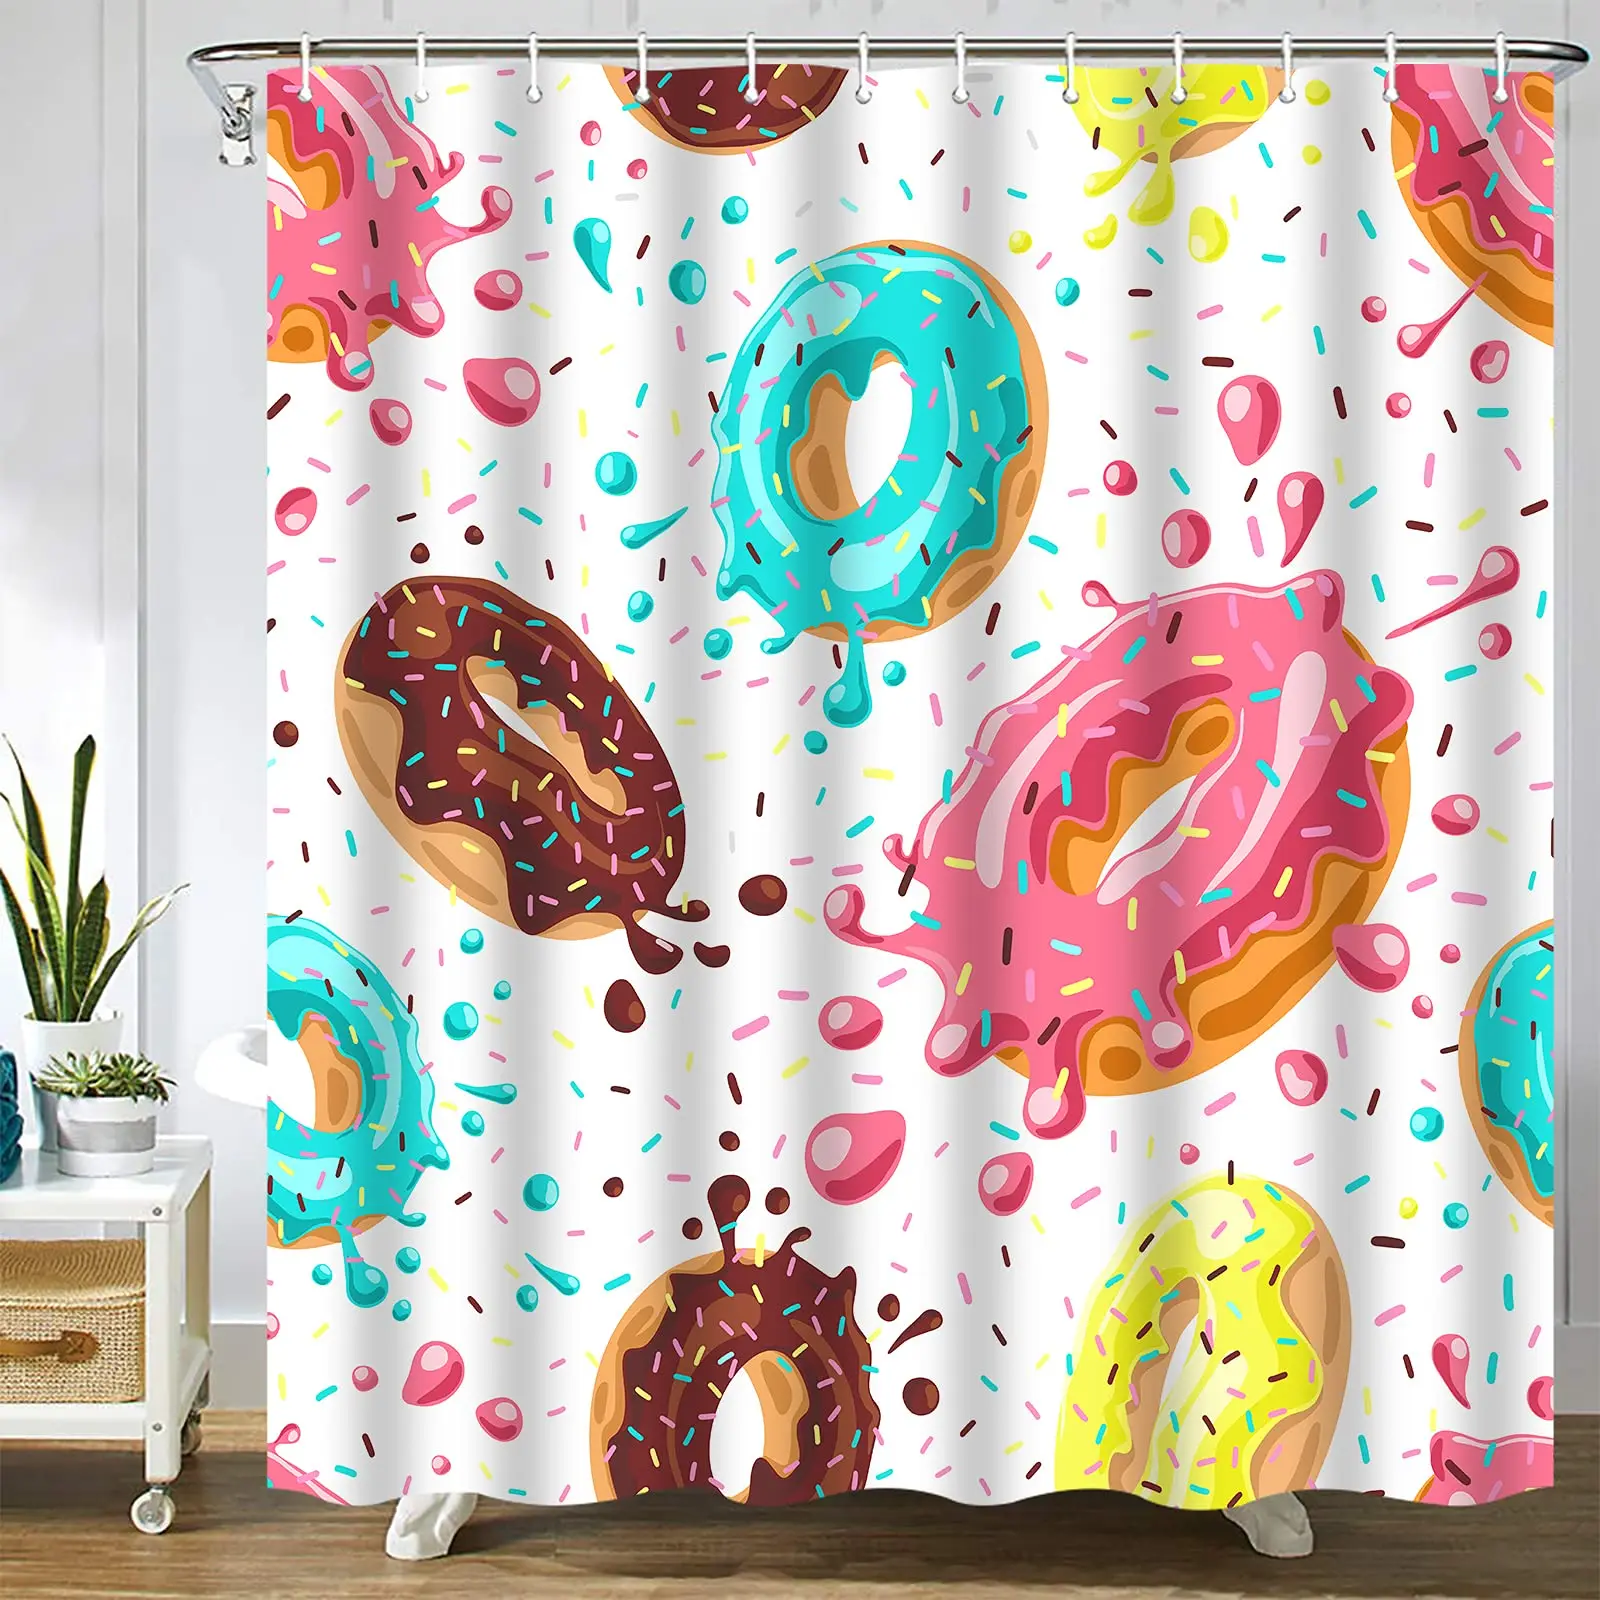 

Shower Curtain Colorful Donuts Pink Chocolate Lemon Blue Mint Glaze Bathroom Curtains Polyester Fabric Waterproof Bathroom Decor